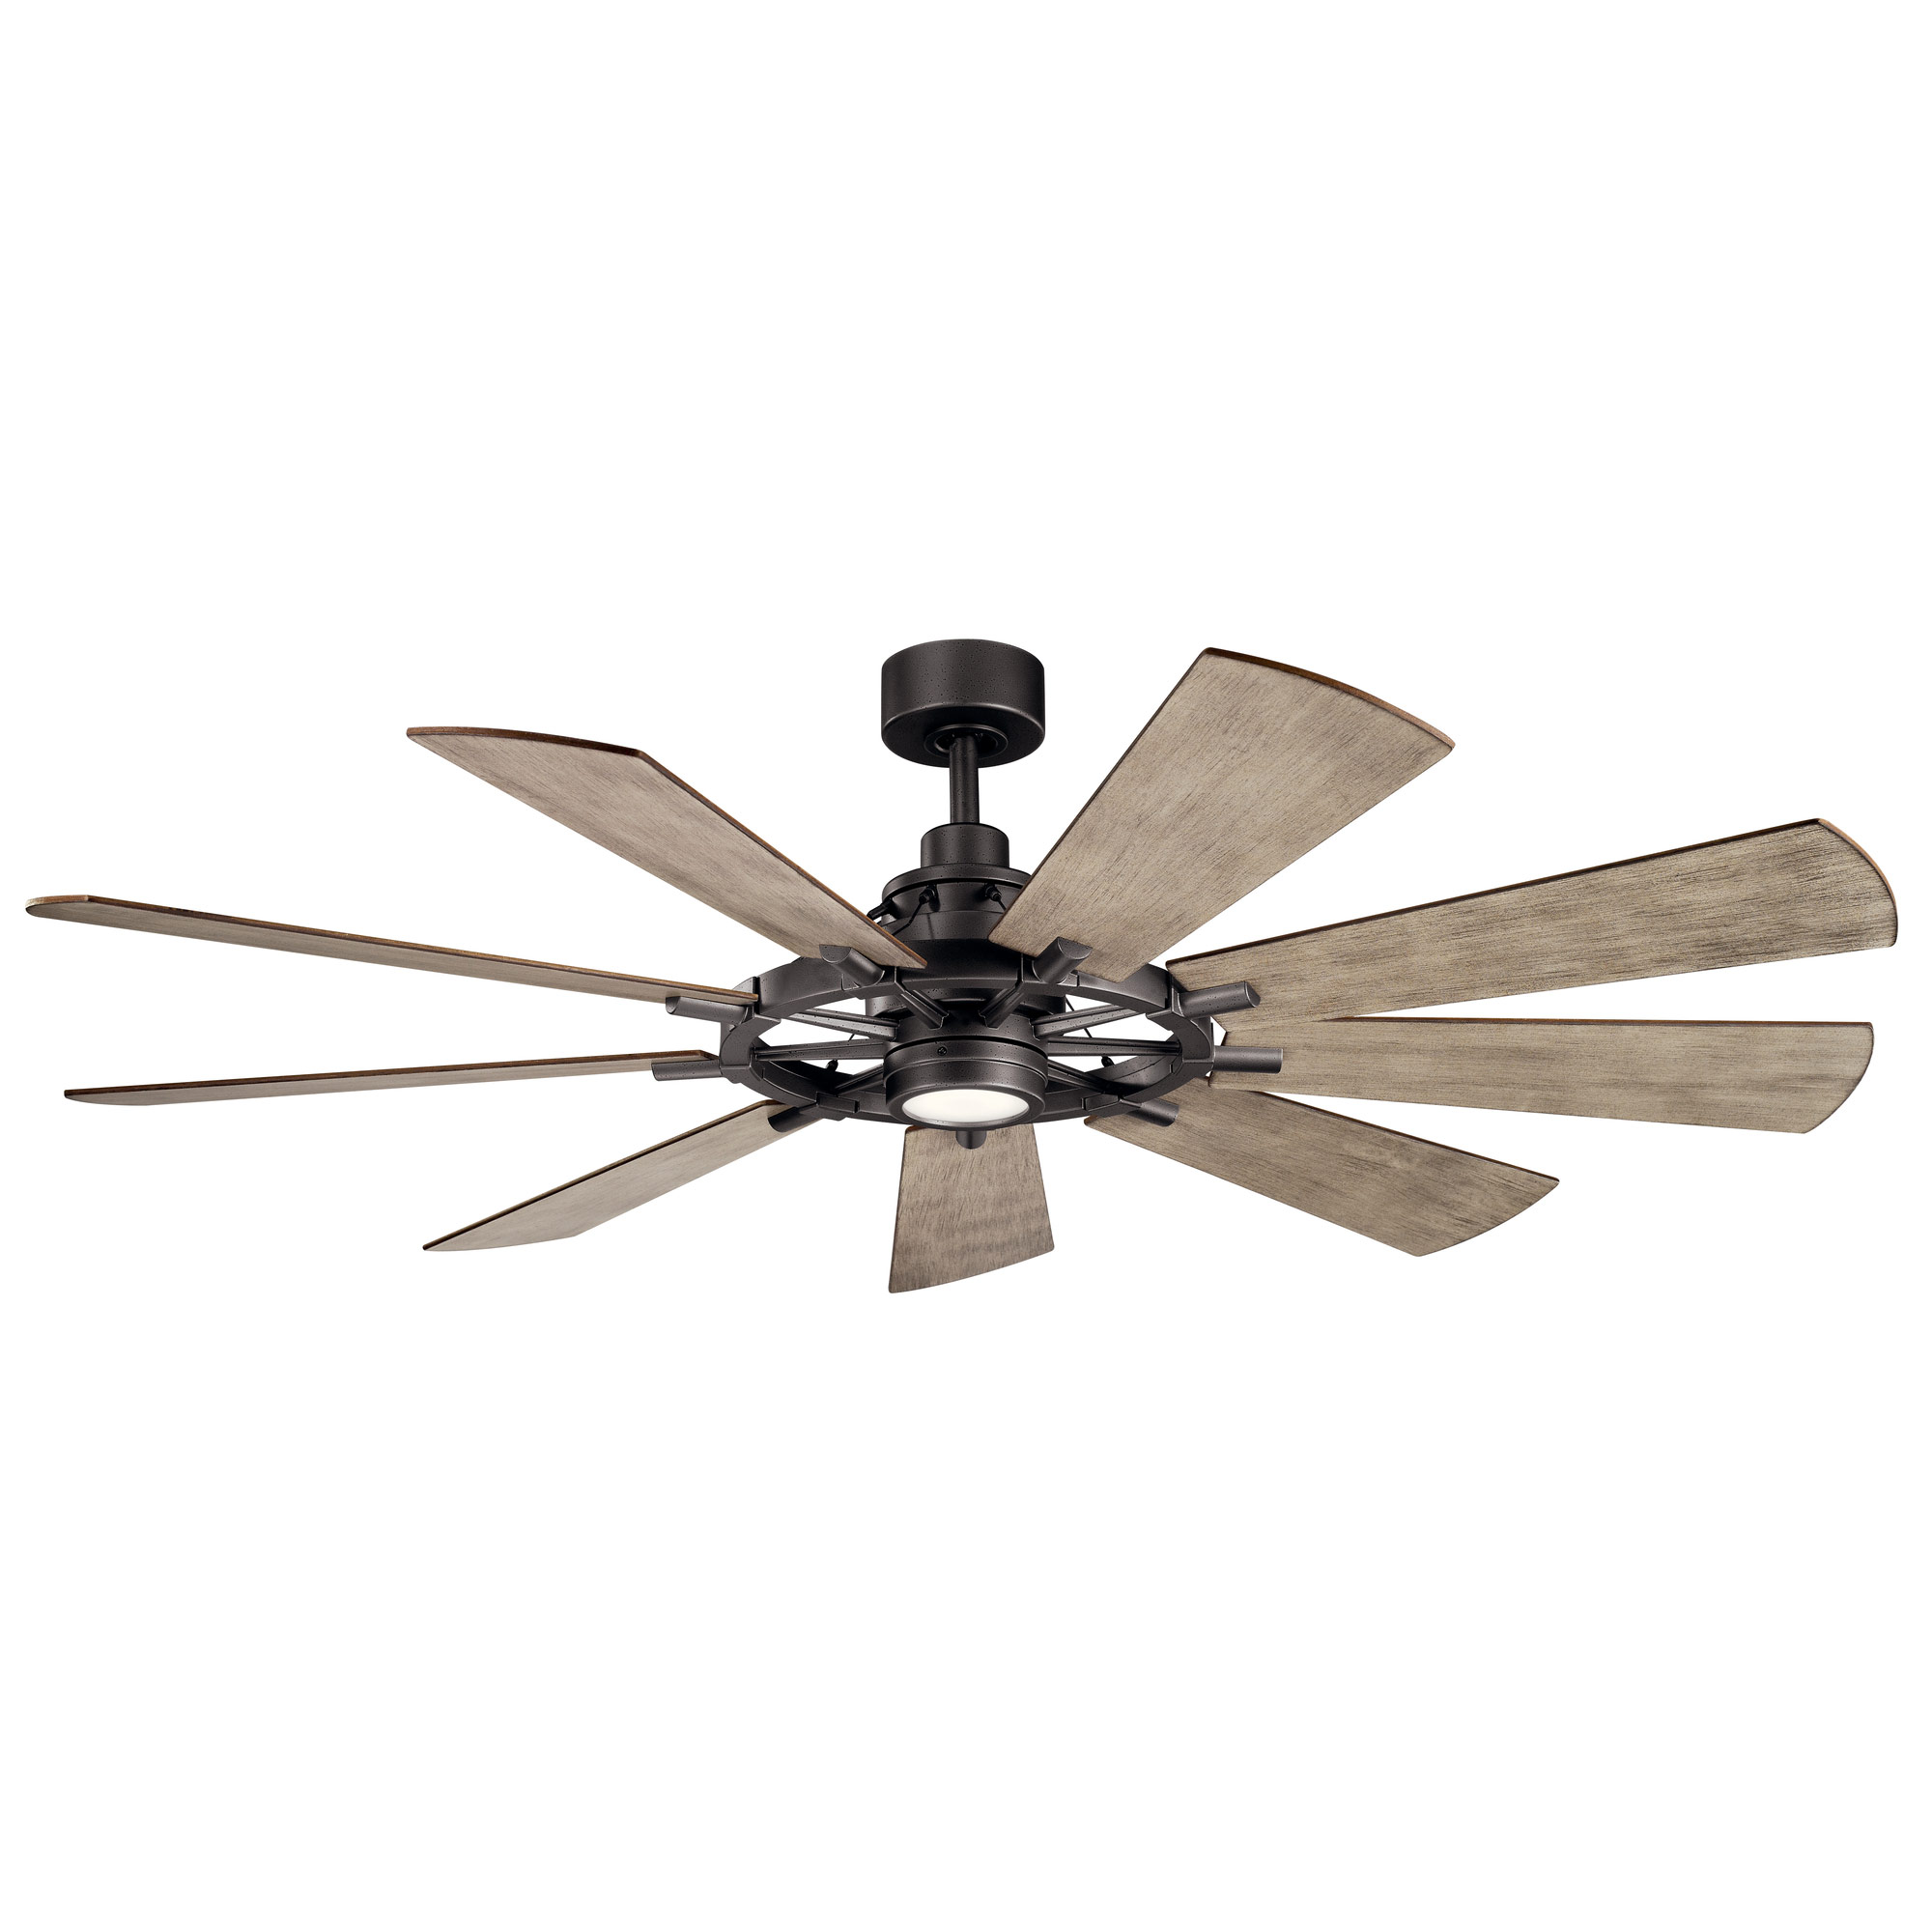 Gentry Ceiling Fan With Light By, How To Change Light Bulb In Kichler Ceiling Fan